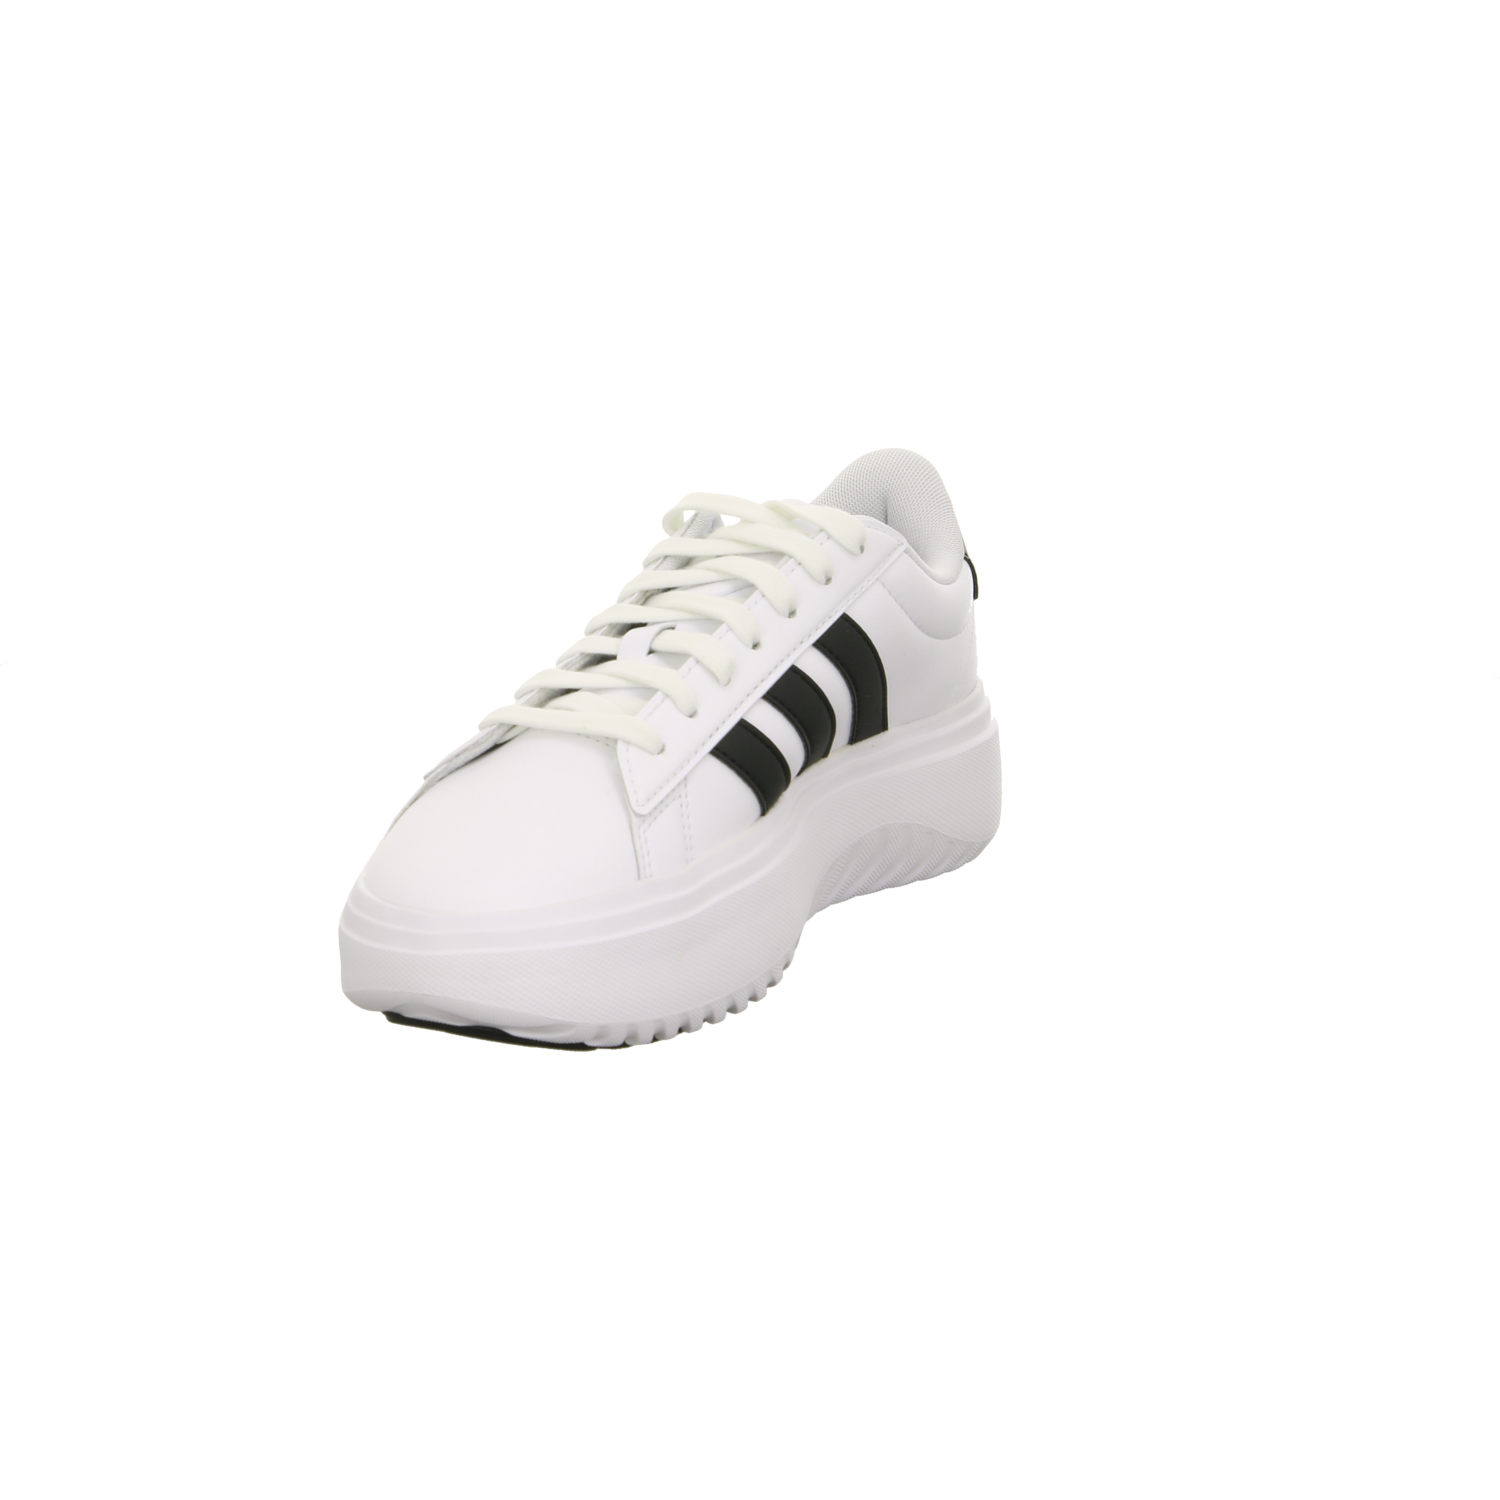 Adidas Sneaker W weiß